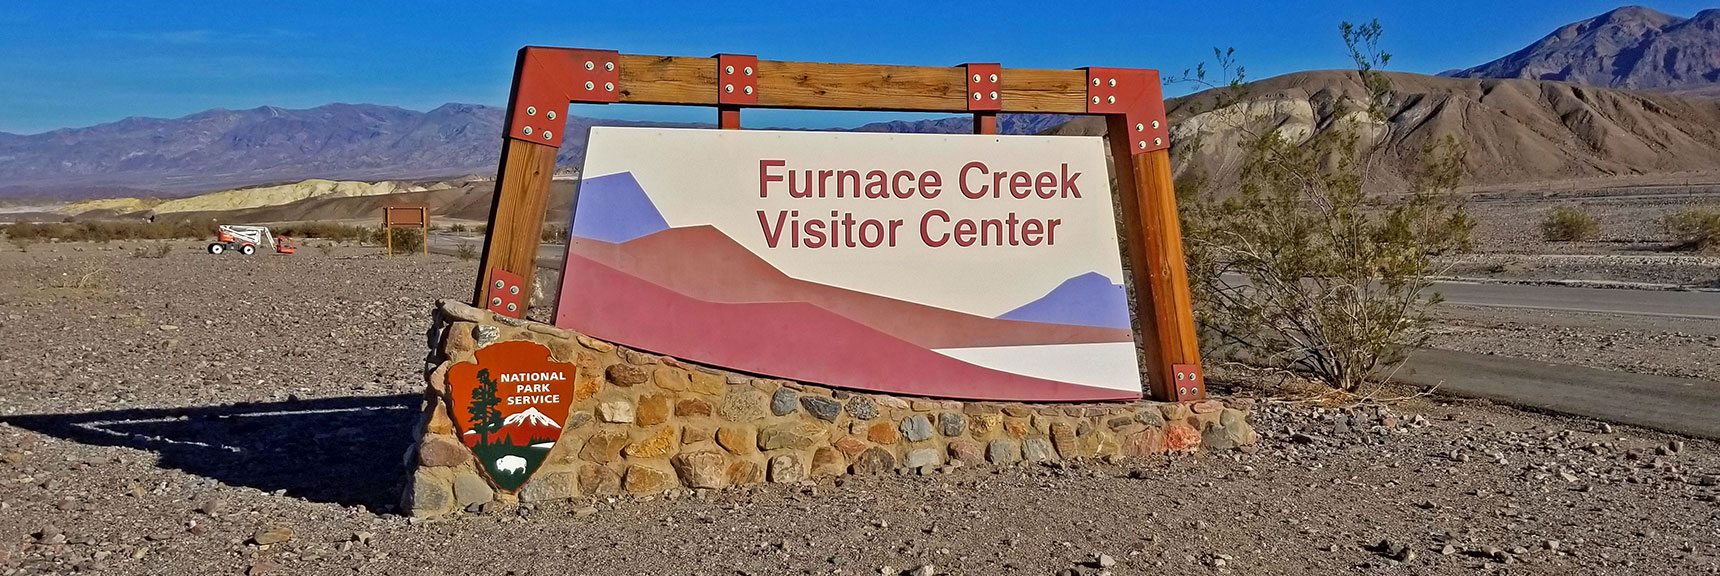 Furnace Creek Visitor Center Sign | Tea House & Table Rock Circuit | Furnace Creek | Death Valley National Park, California